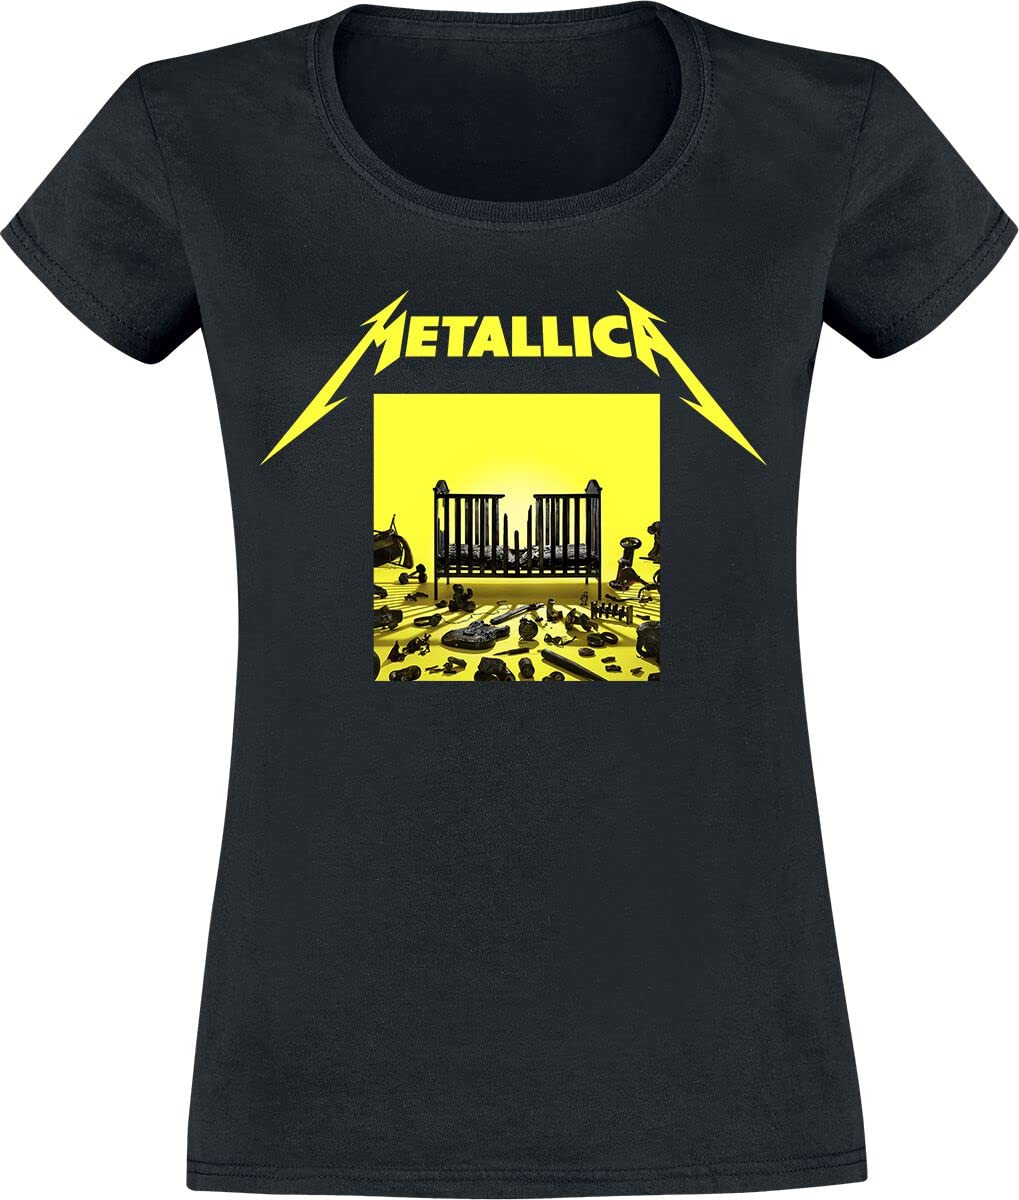 Metallica M72 Squared Cover Frauen T-Shirt schwarz L 100% Baumwolle Band-Merch, Bands